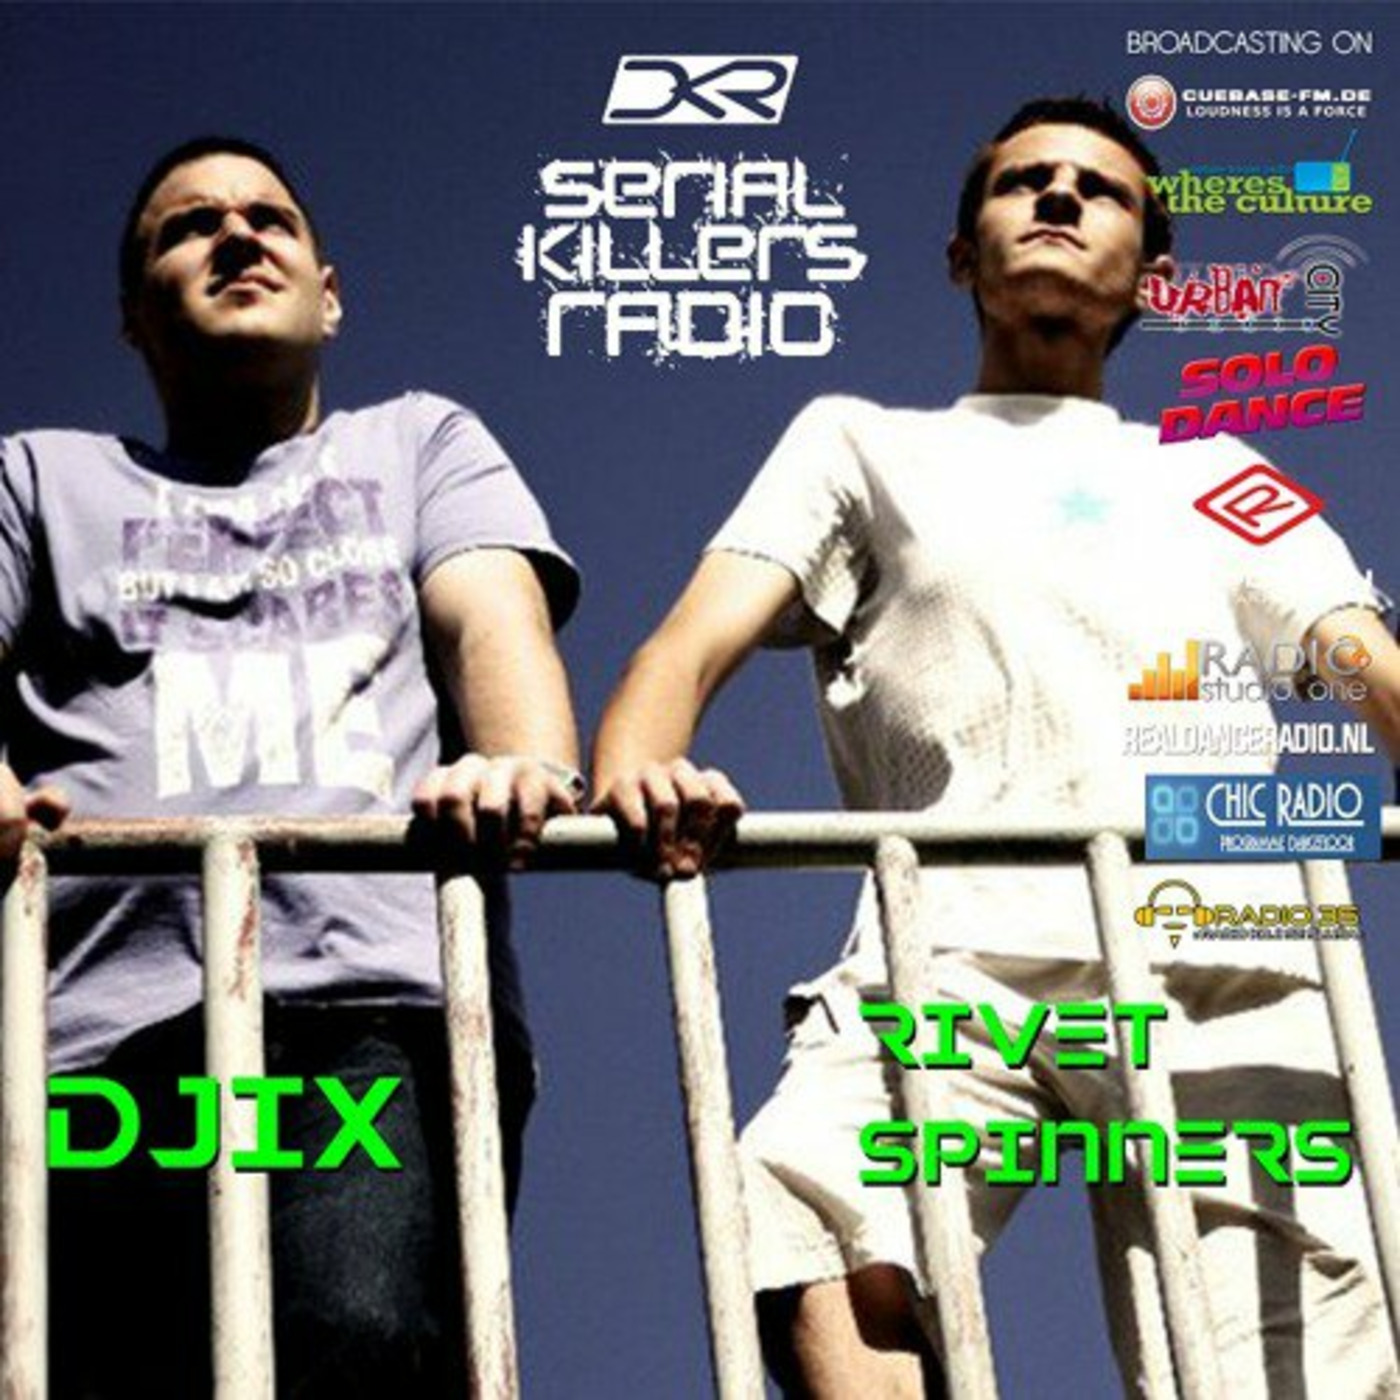 DKR Serial Killers 107 (DJIX & Rivet Spinners)